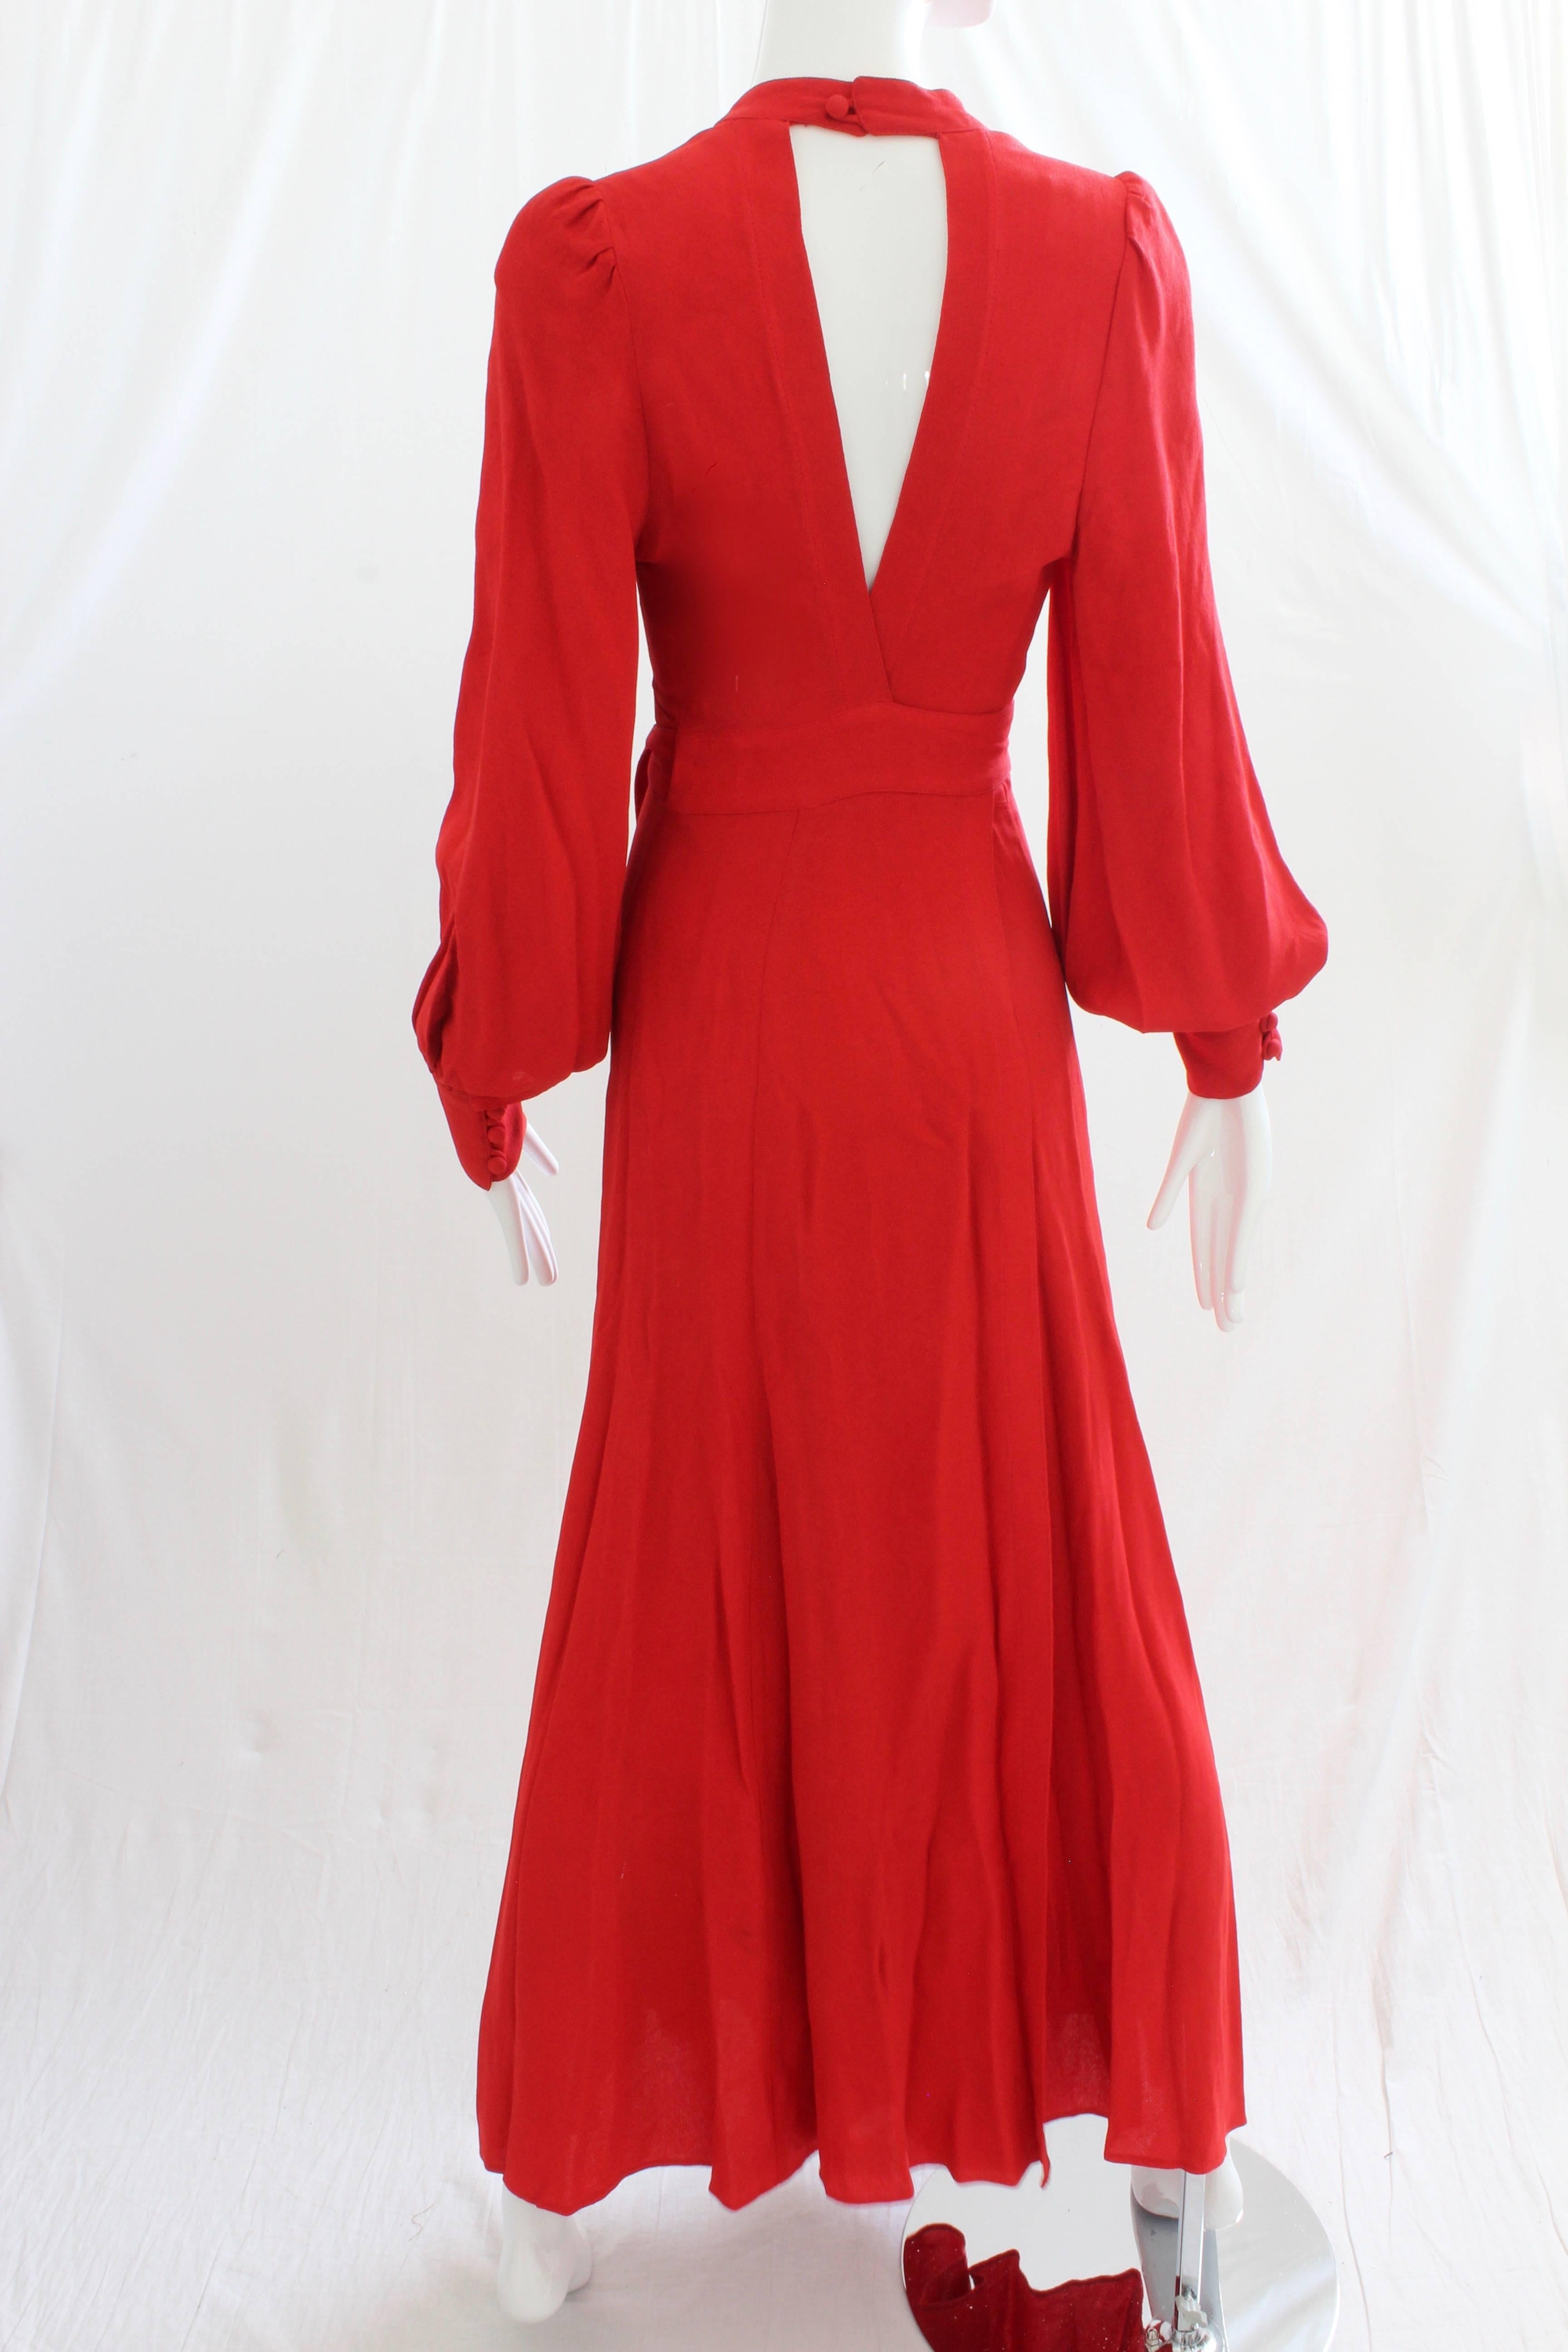 ossie clark red dress